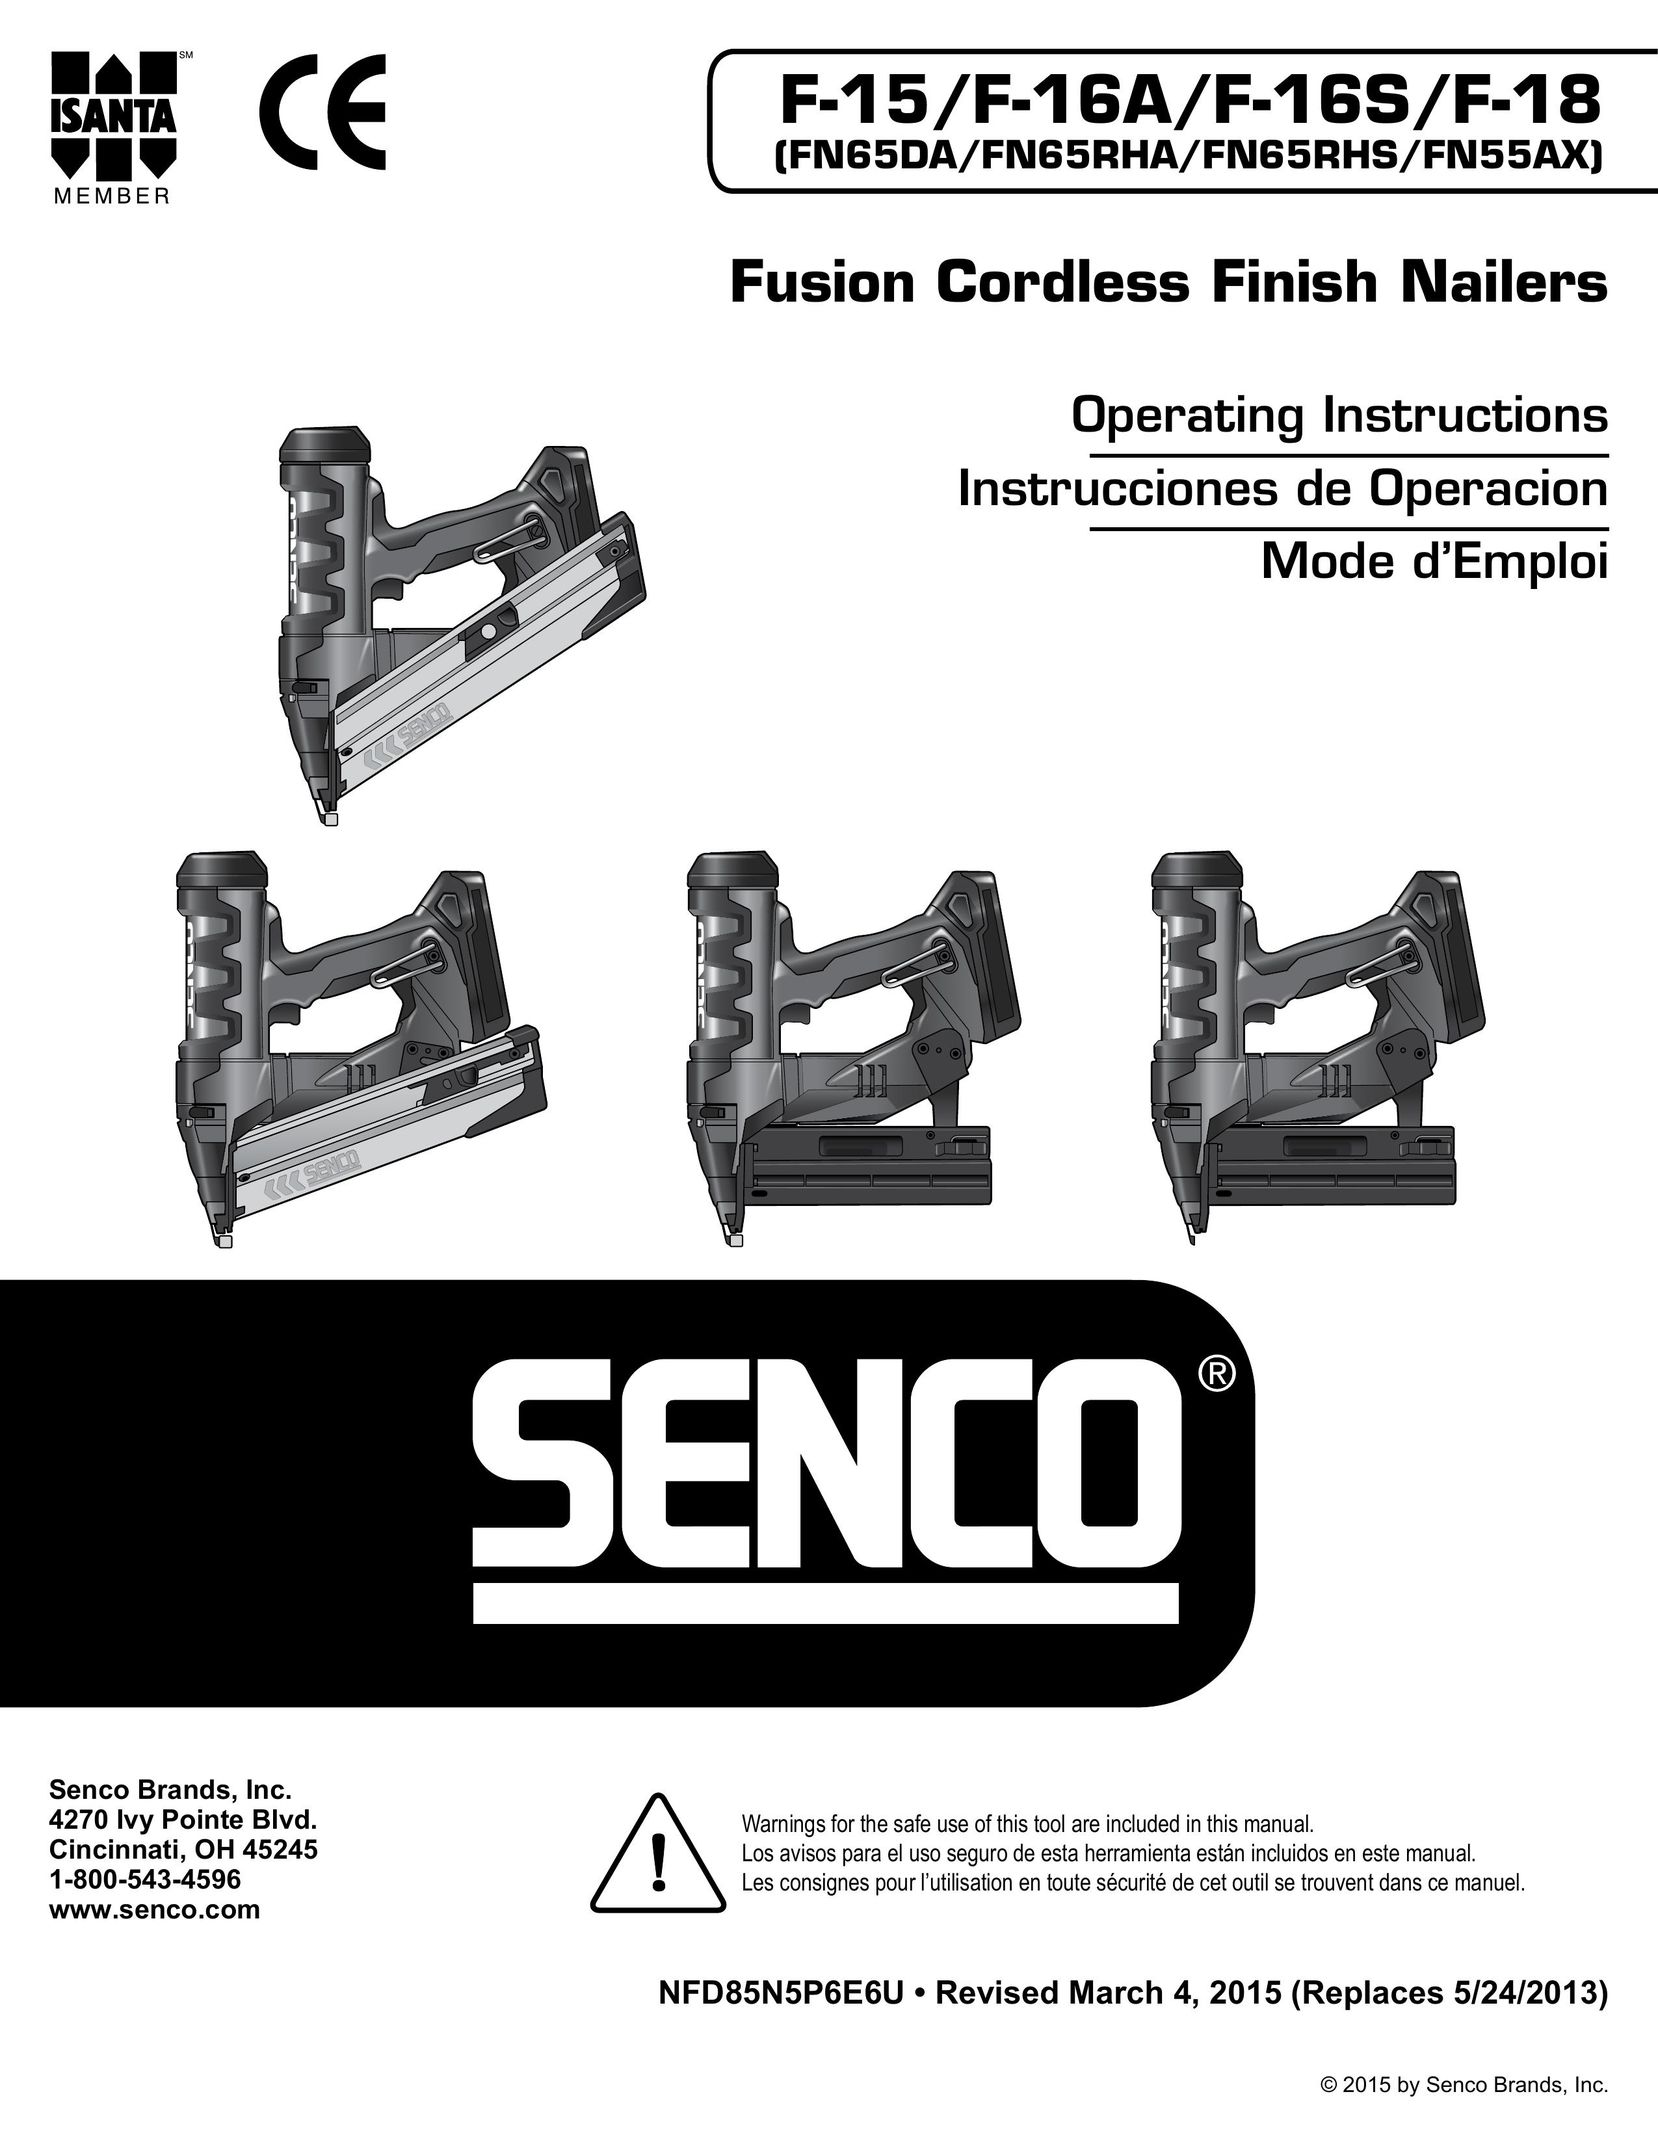 Senco FN65RHA Nail Gun User Manual